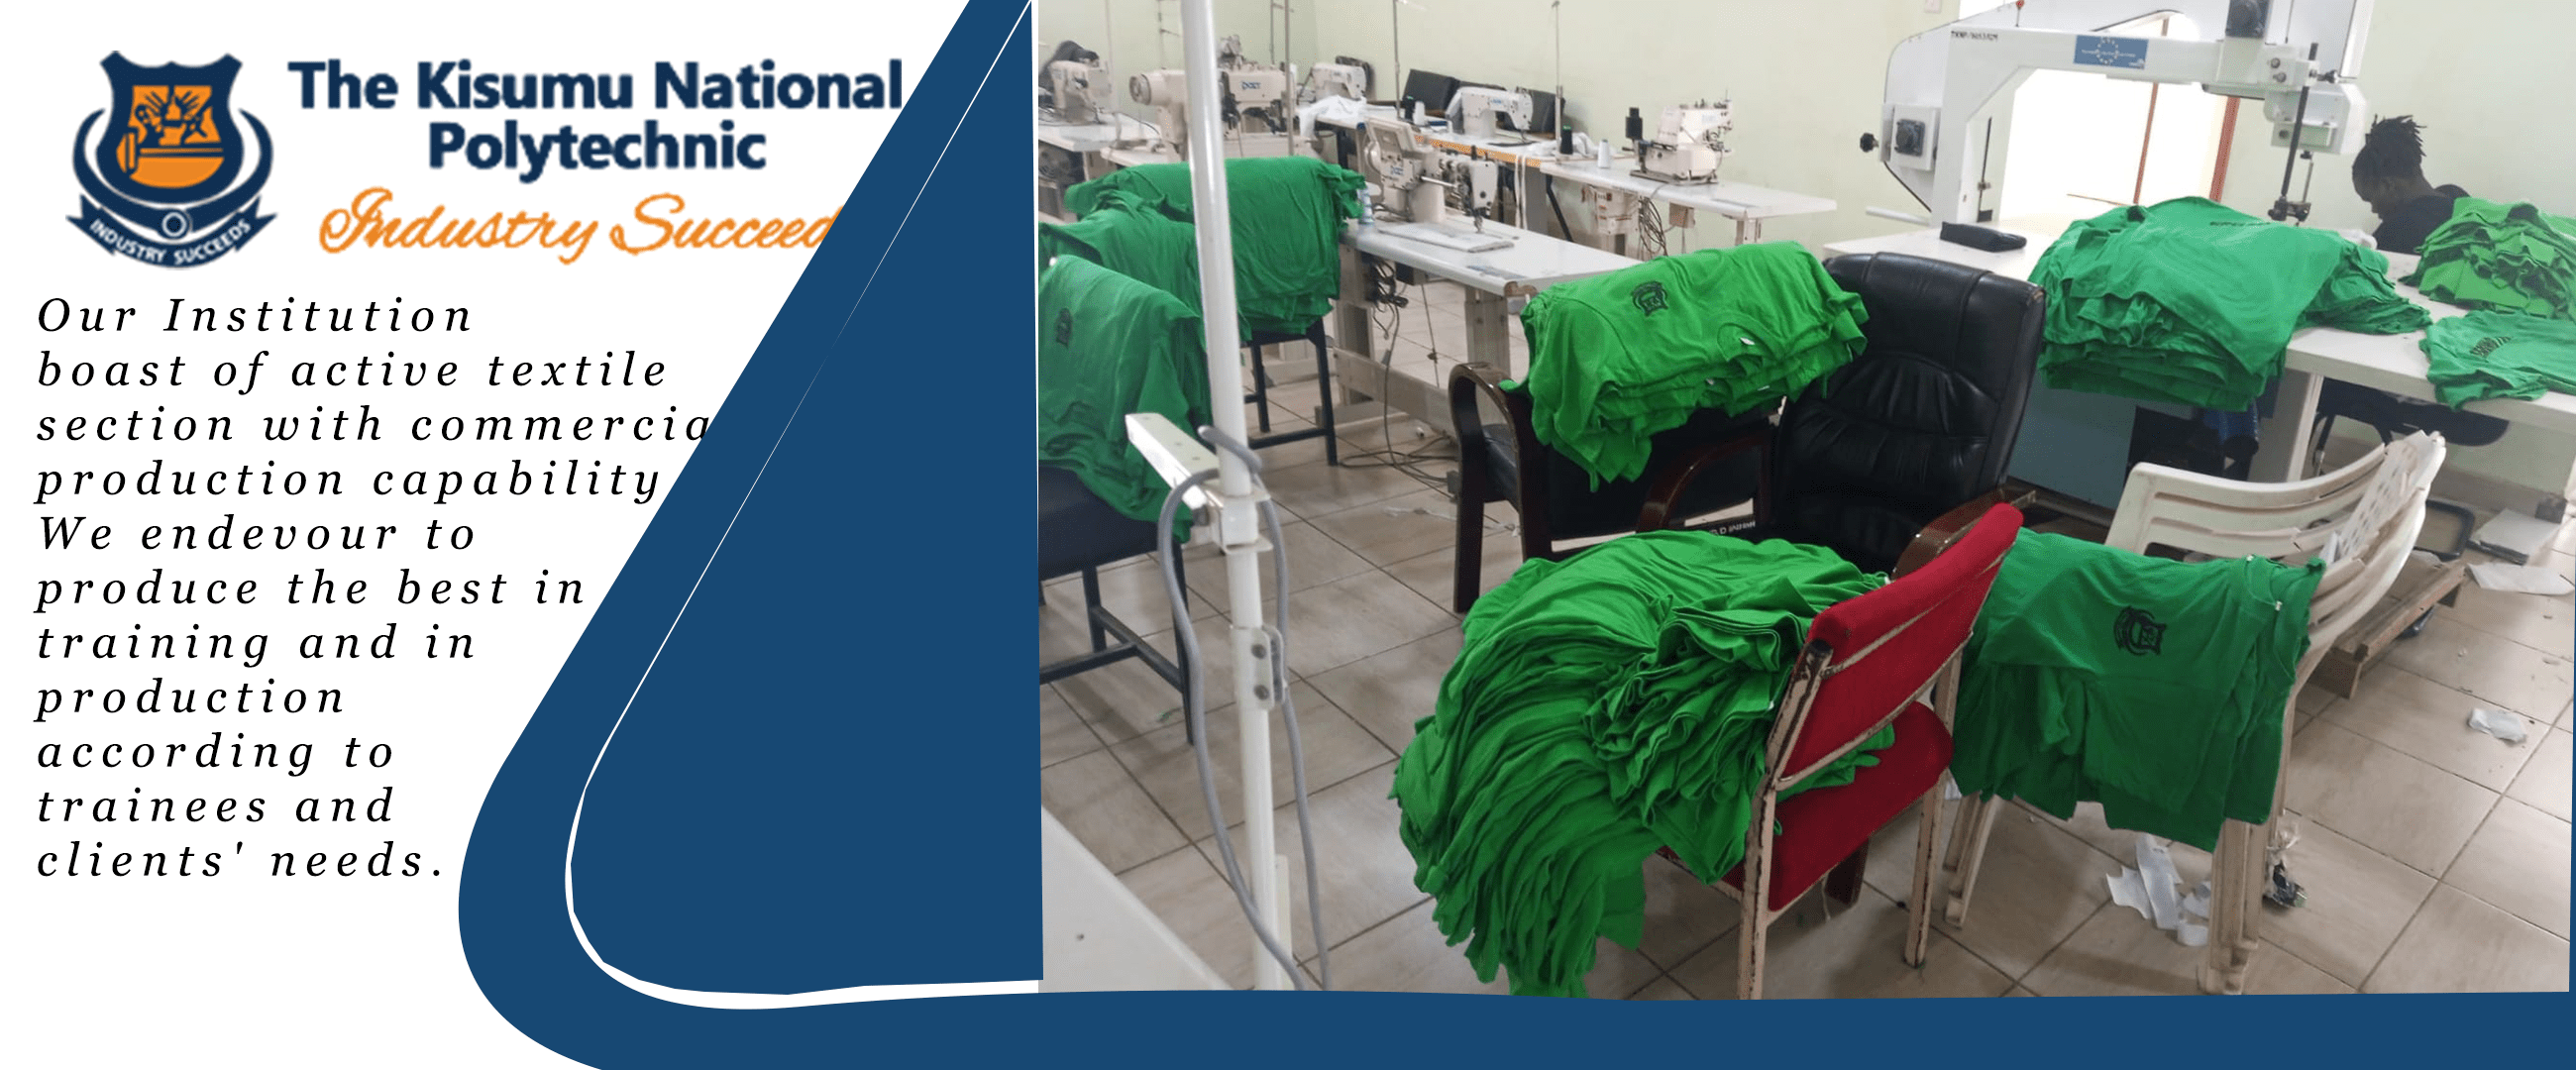 Kisumu Polytechnic Textile Production Unit